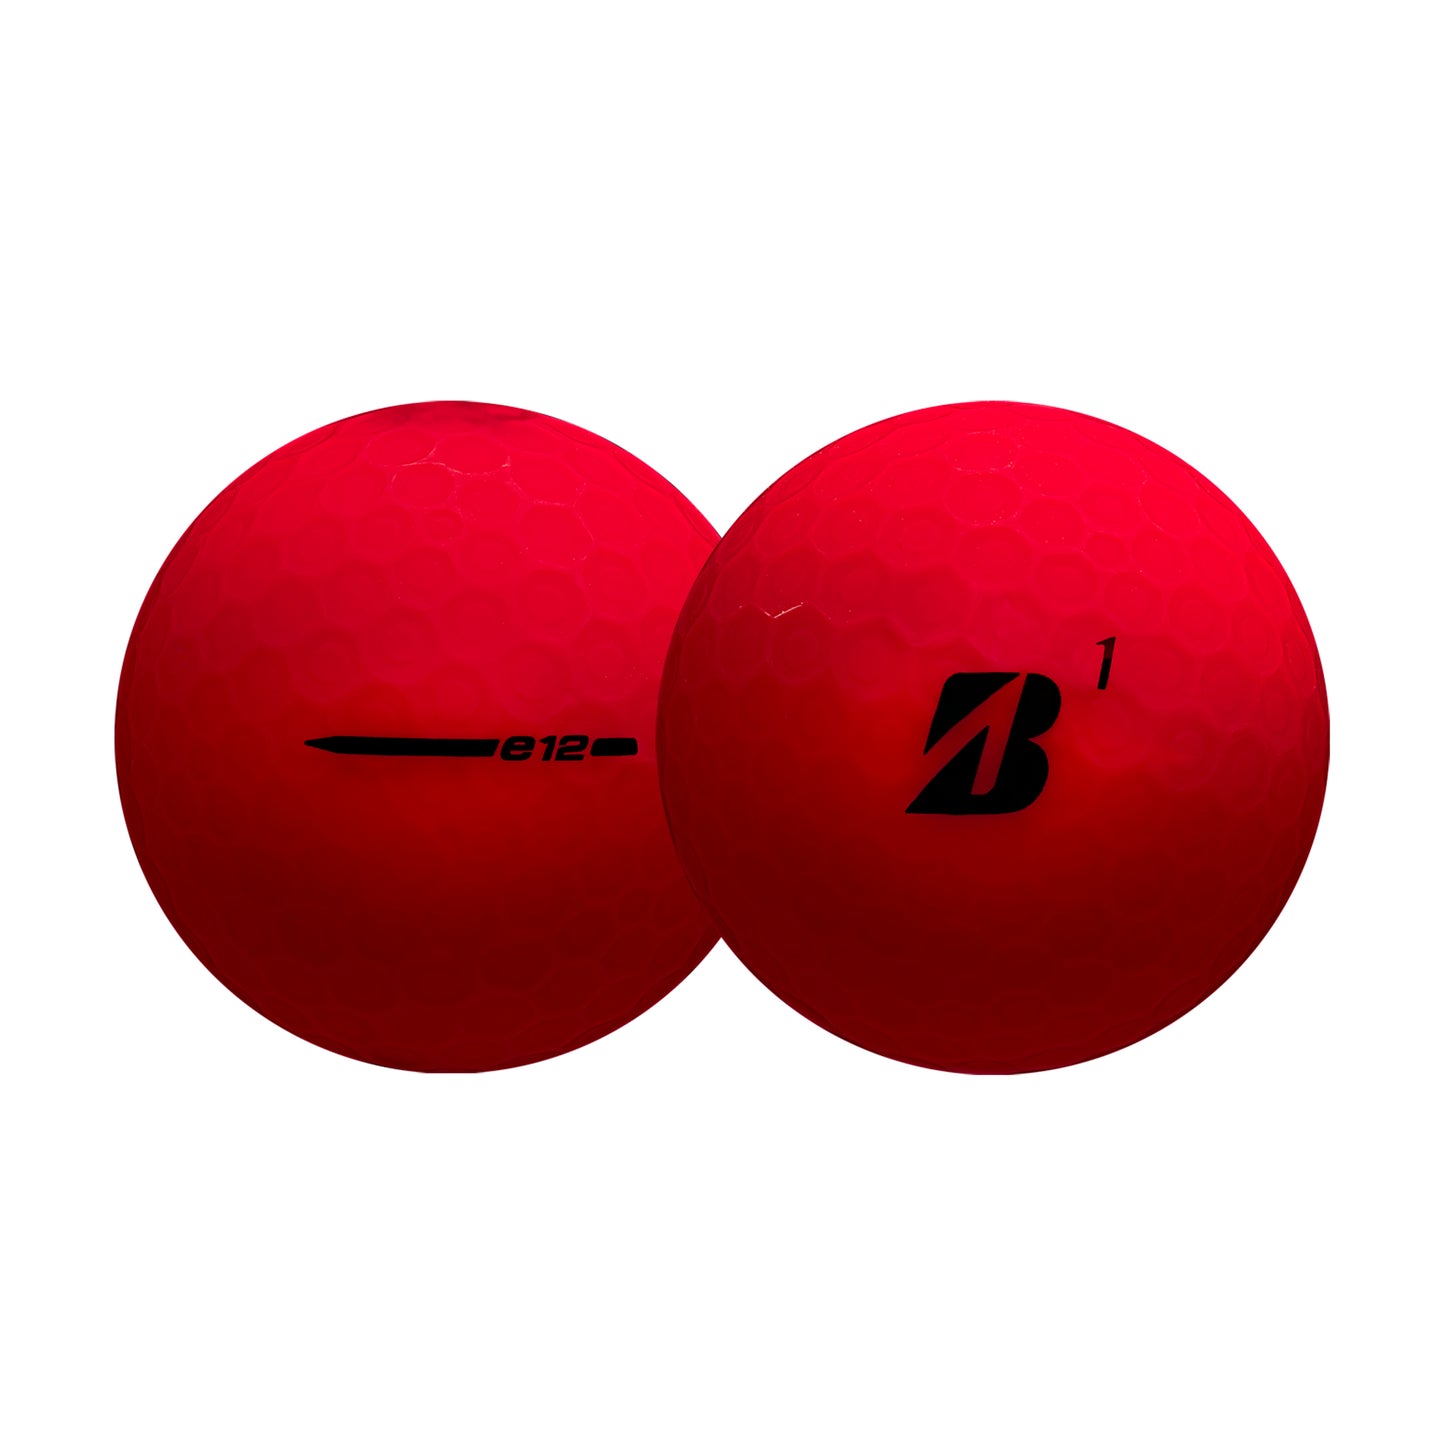 Bridgestone E12 Contact Matte Red Golf Balls   